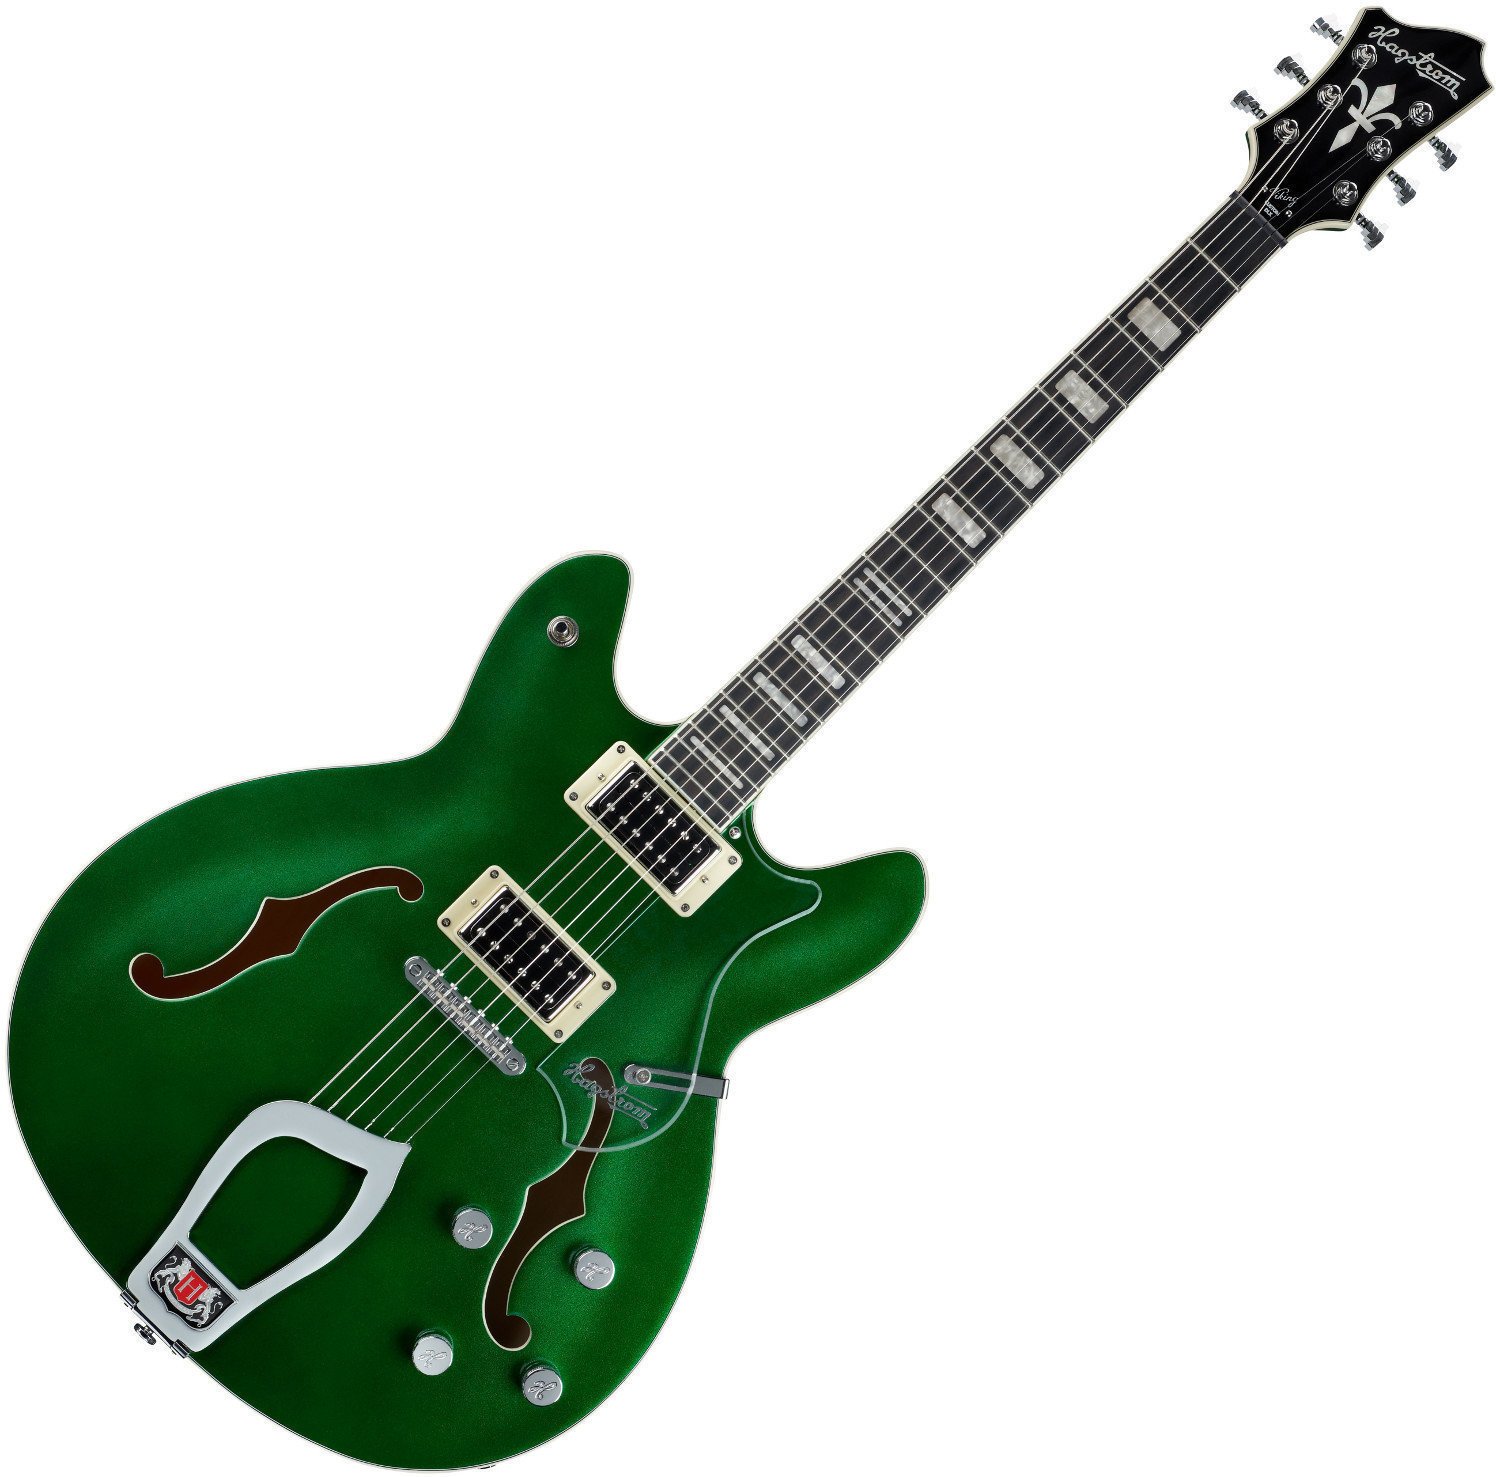 Semiakustická kytara Hagstrom Viking Deluxe Custom Limited Edition Emerald Green